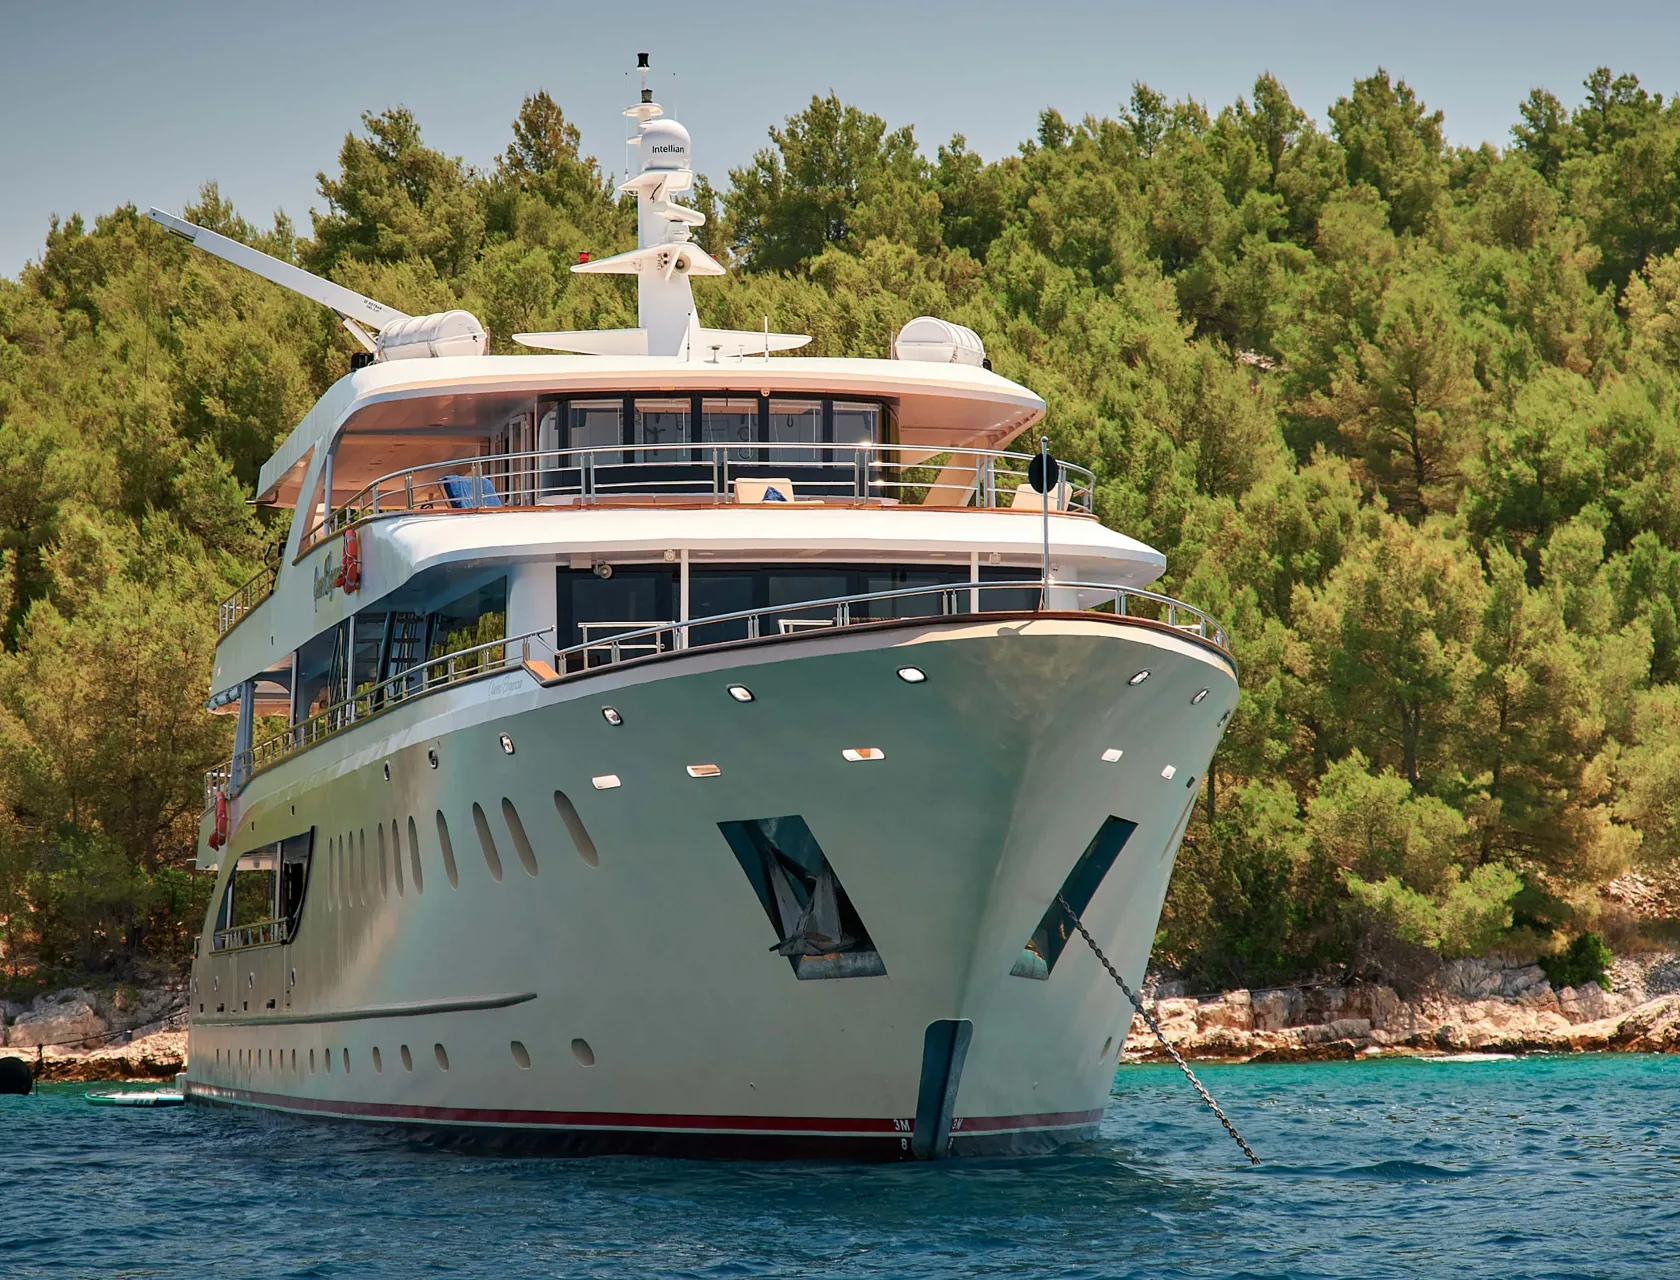 Queen Eleganza Your Private Group's Escapes on Croatia's Finest Vessel